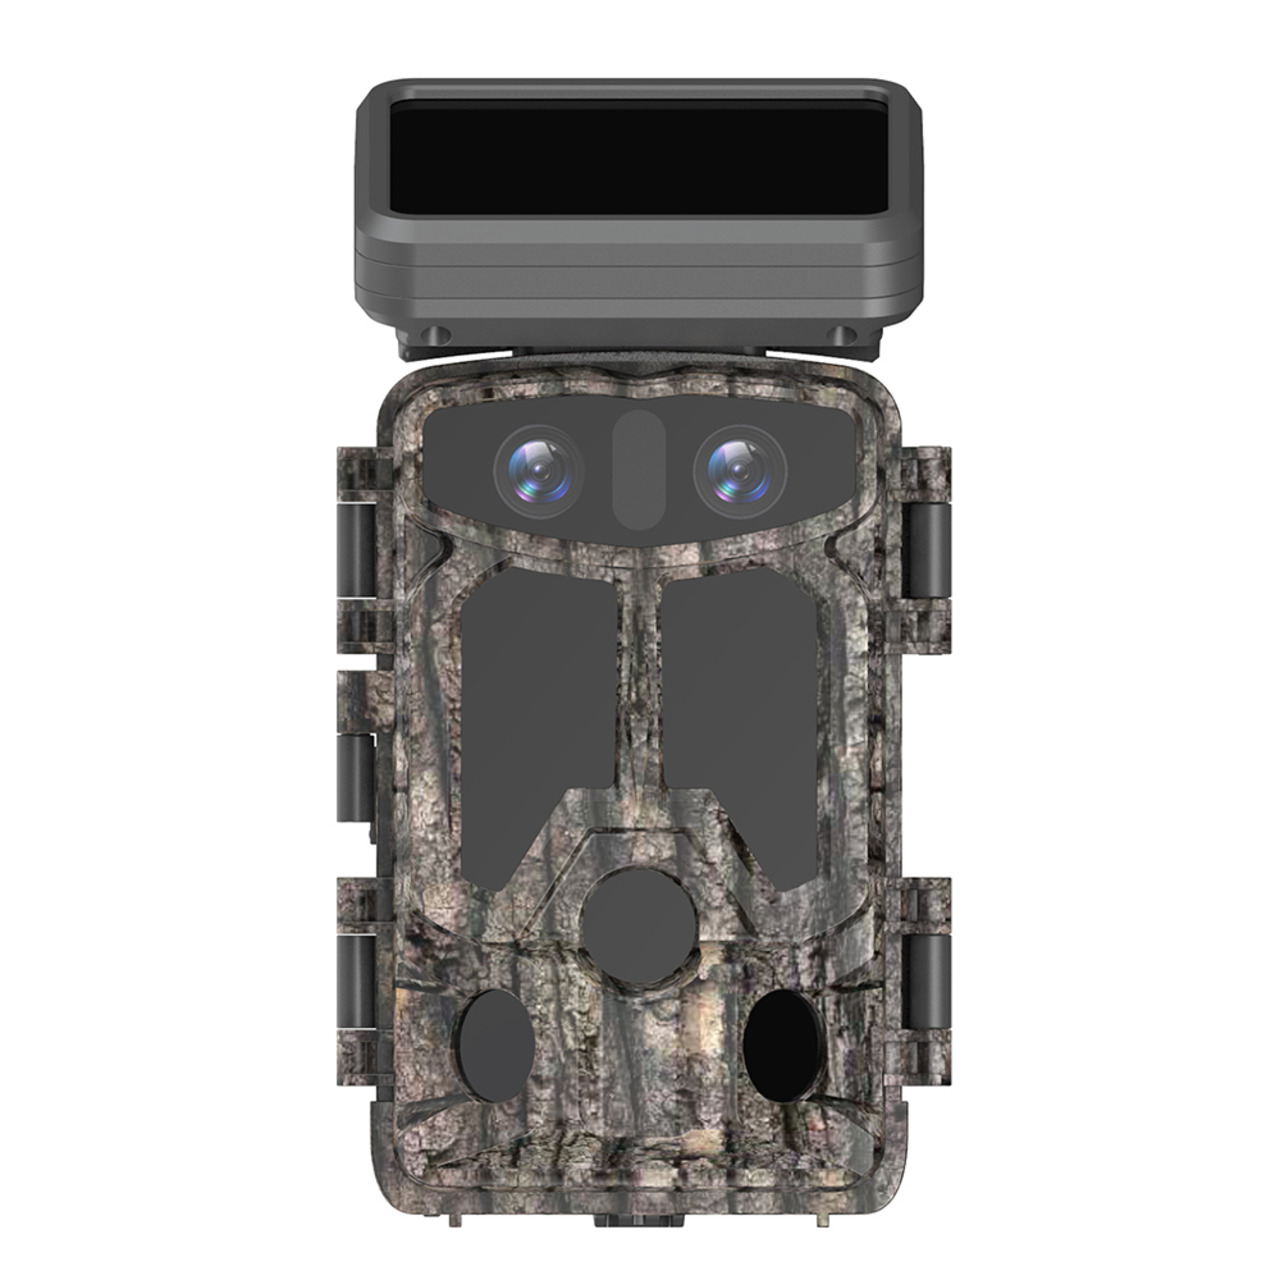 Braun Solar Fotofalle - Wildkamera Scouting Cam BLACK1320WiFi 4K- App- Dual-Kamera- WiFi- IP65